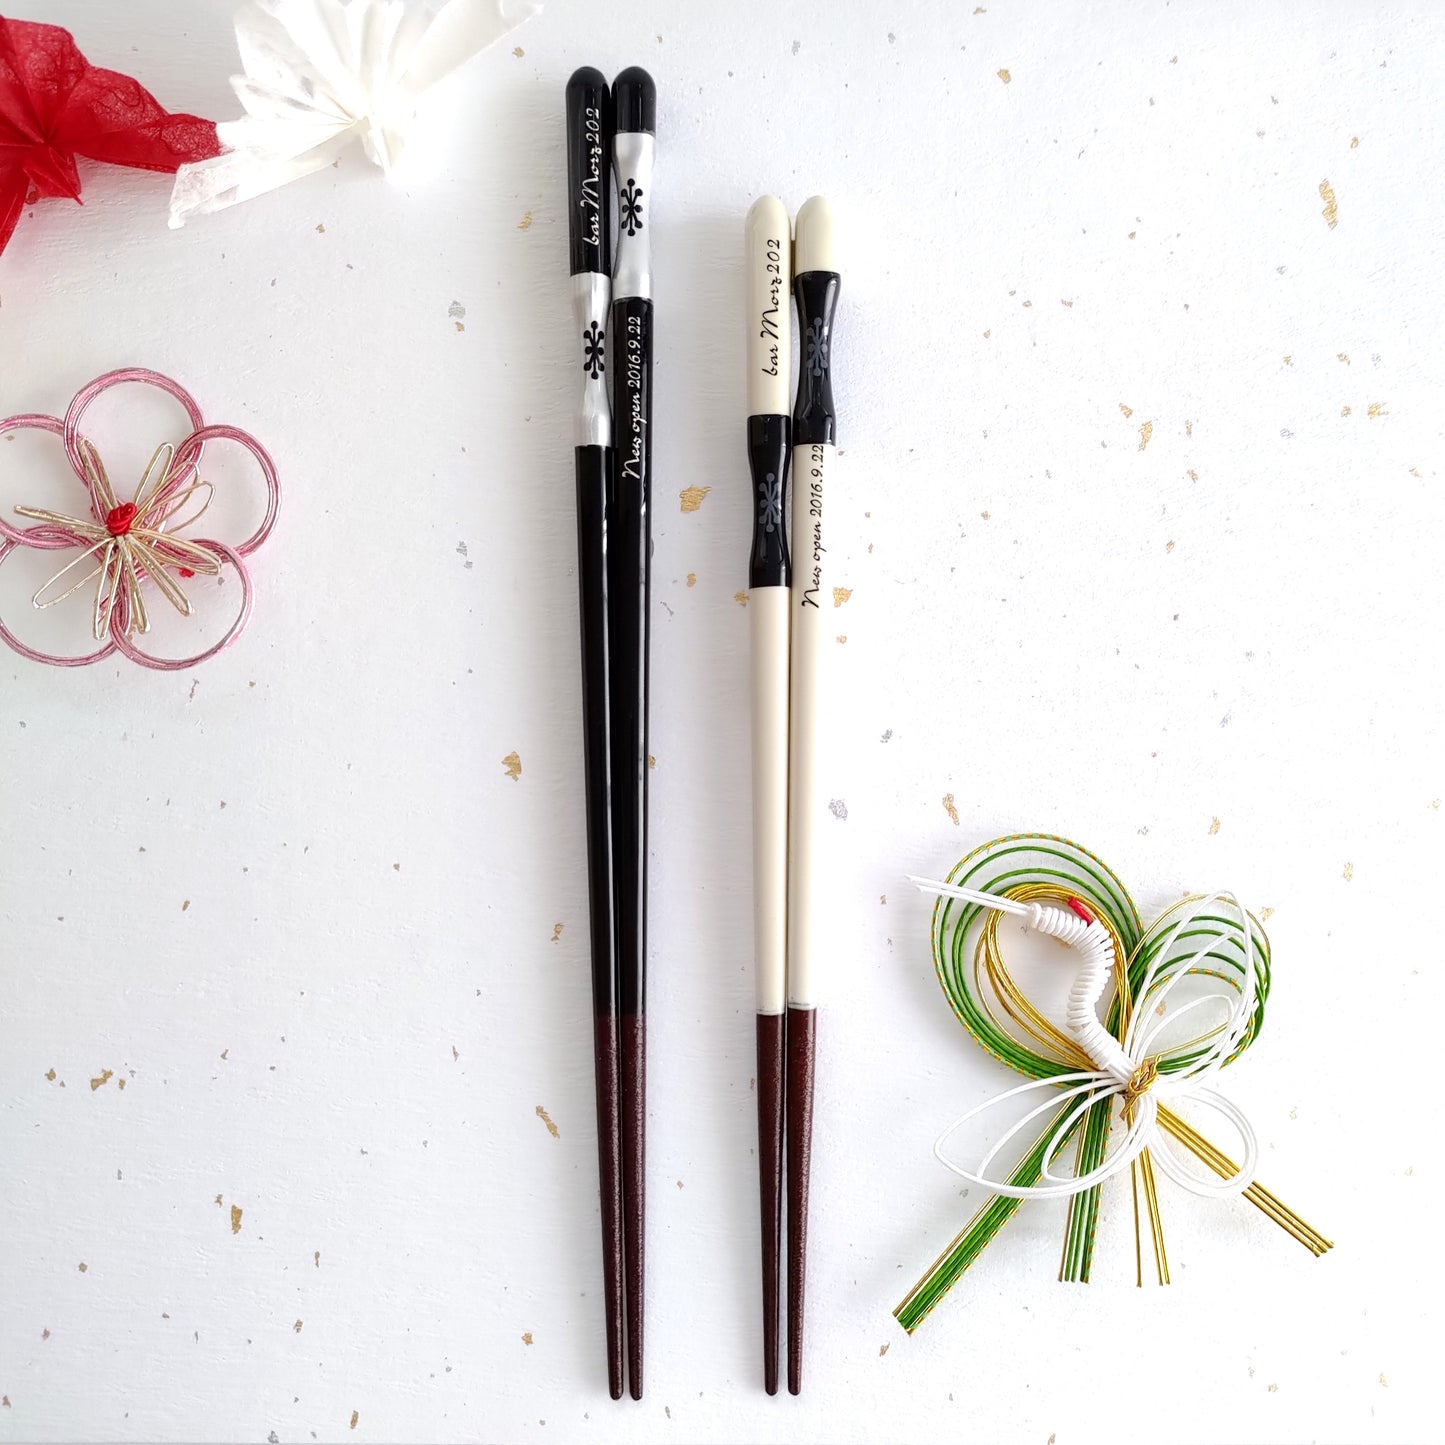 Heart of the forest Japanese chopsticks black white - SINGLE PAIR